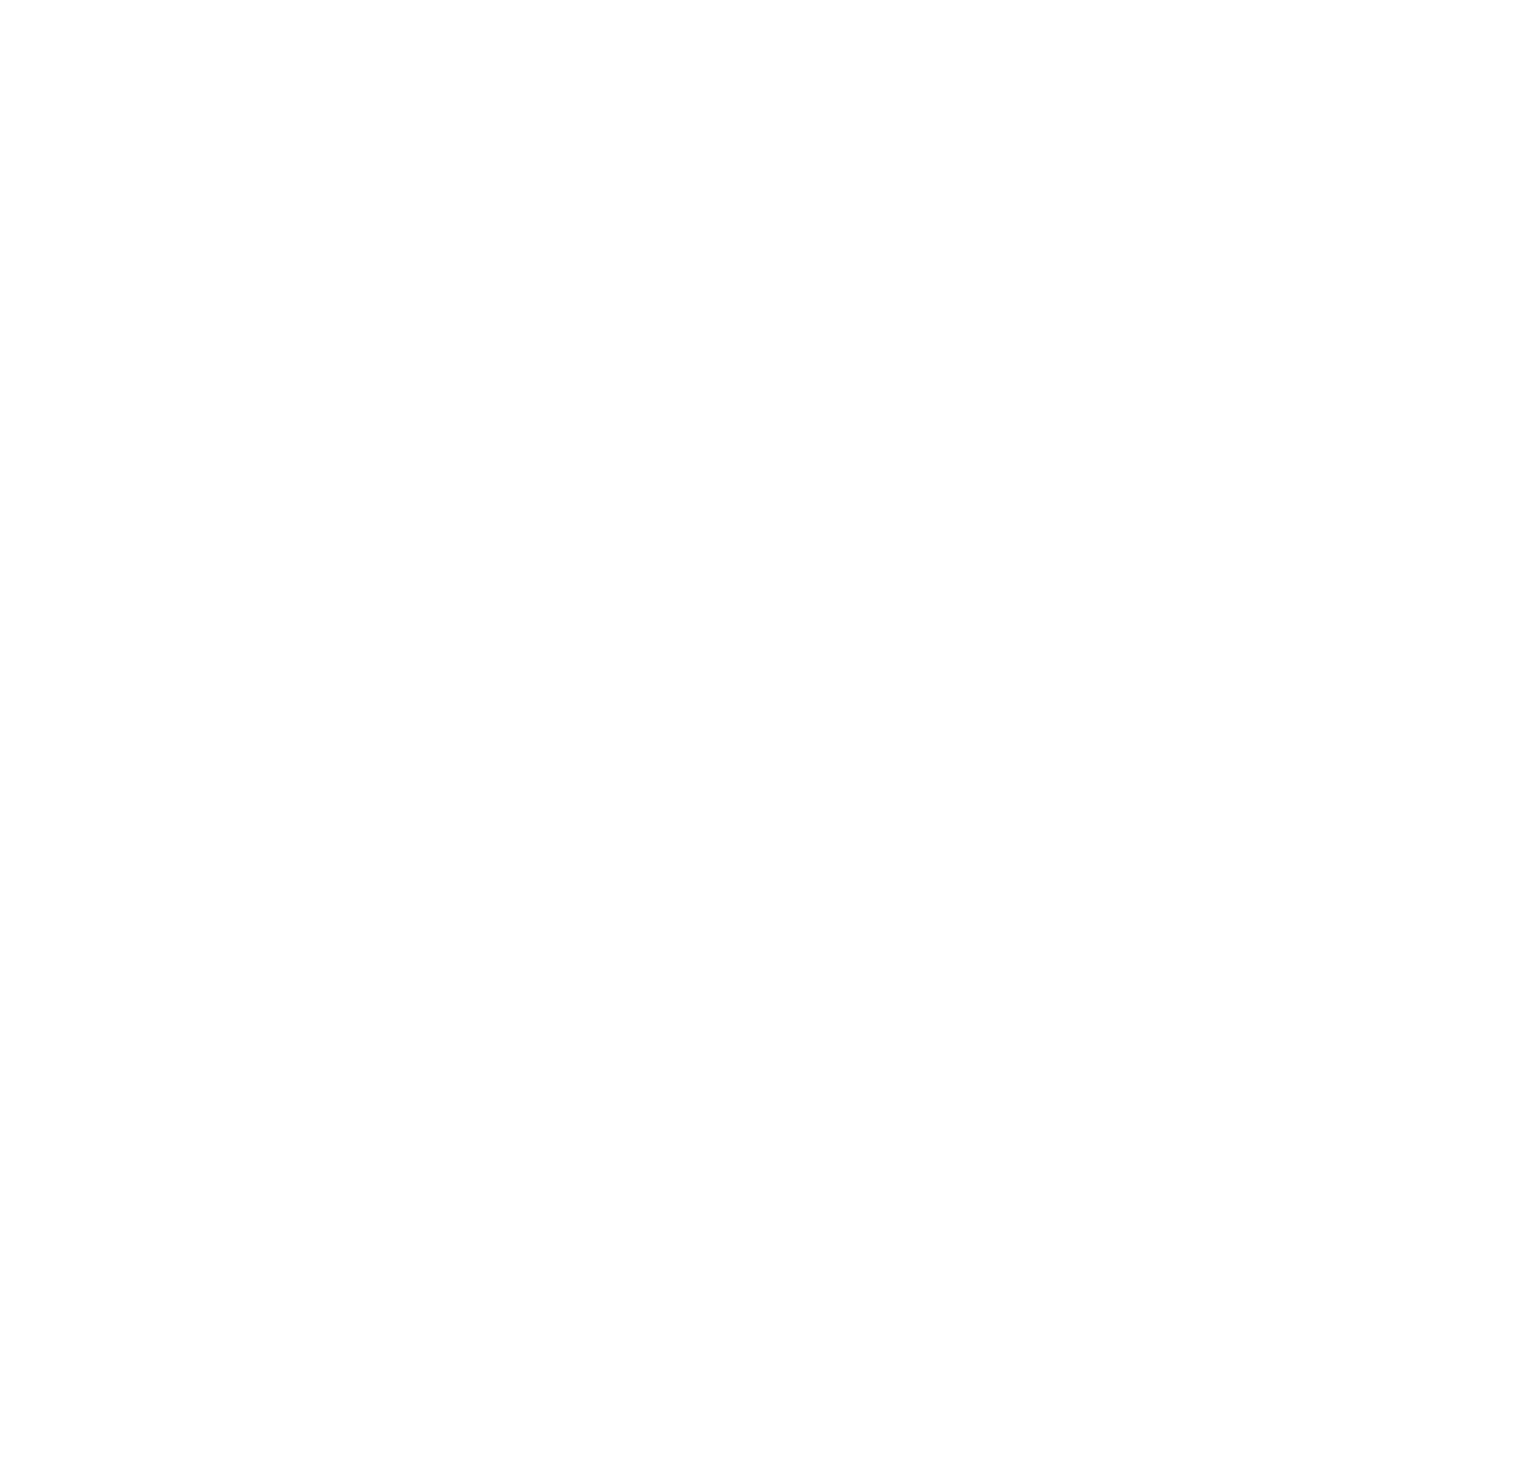 IGM Biosciences logo for dark backgrounds (transparent PNG)